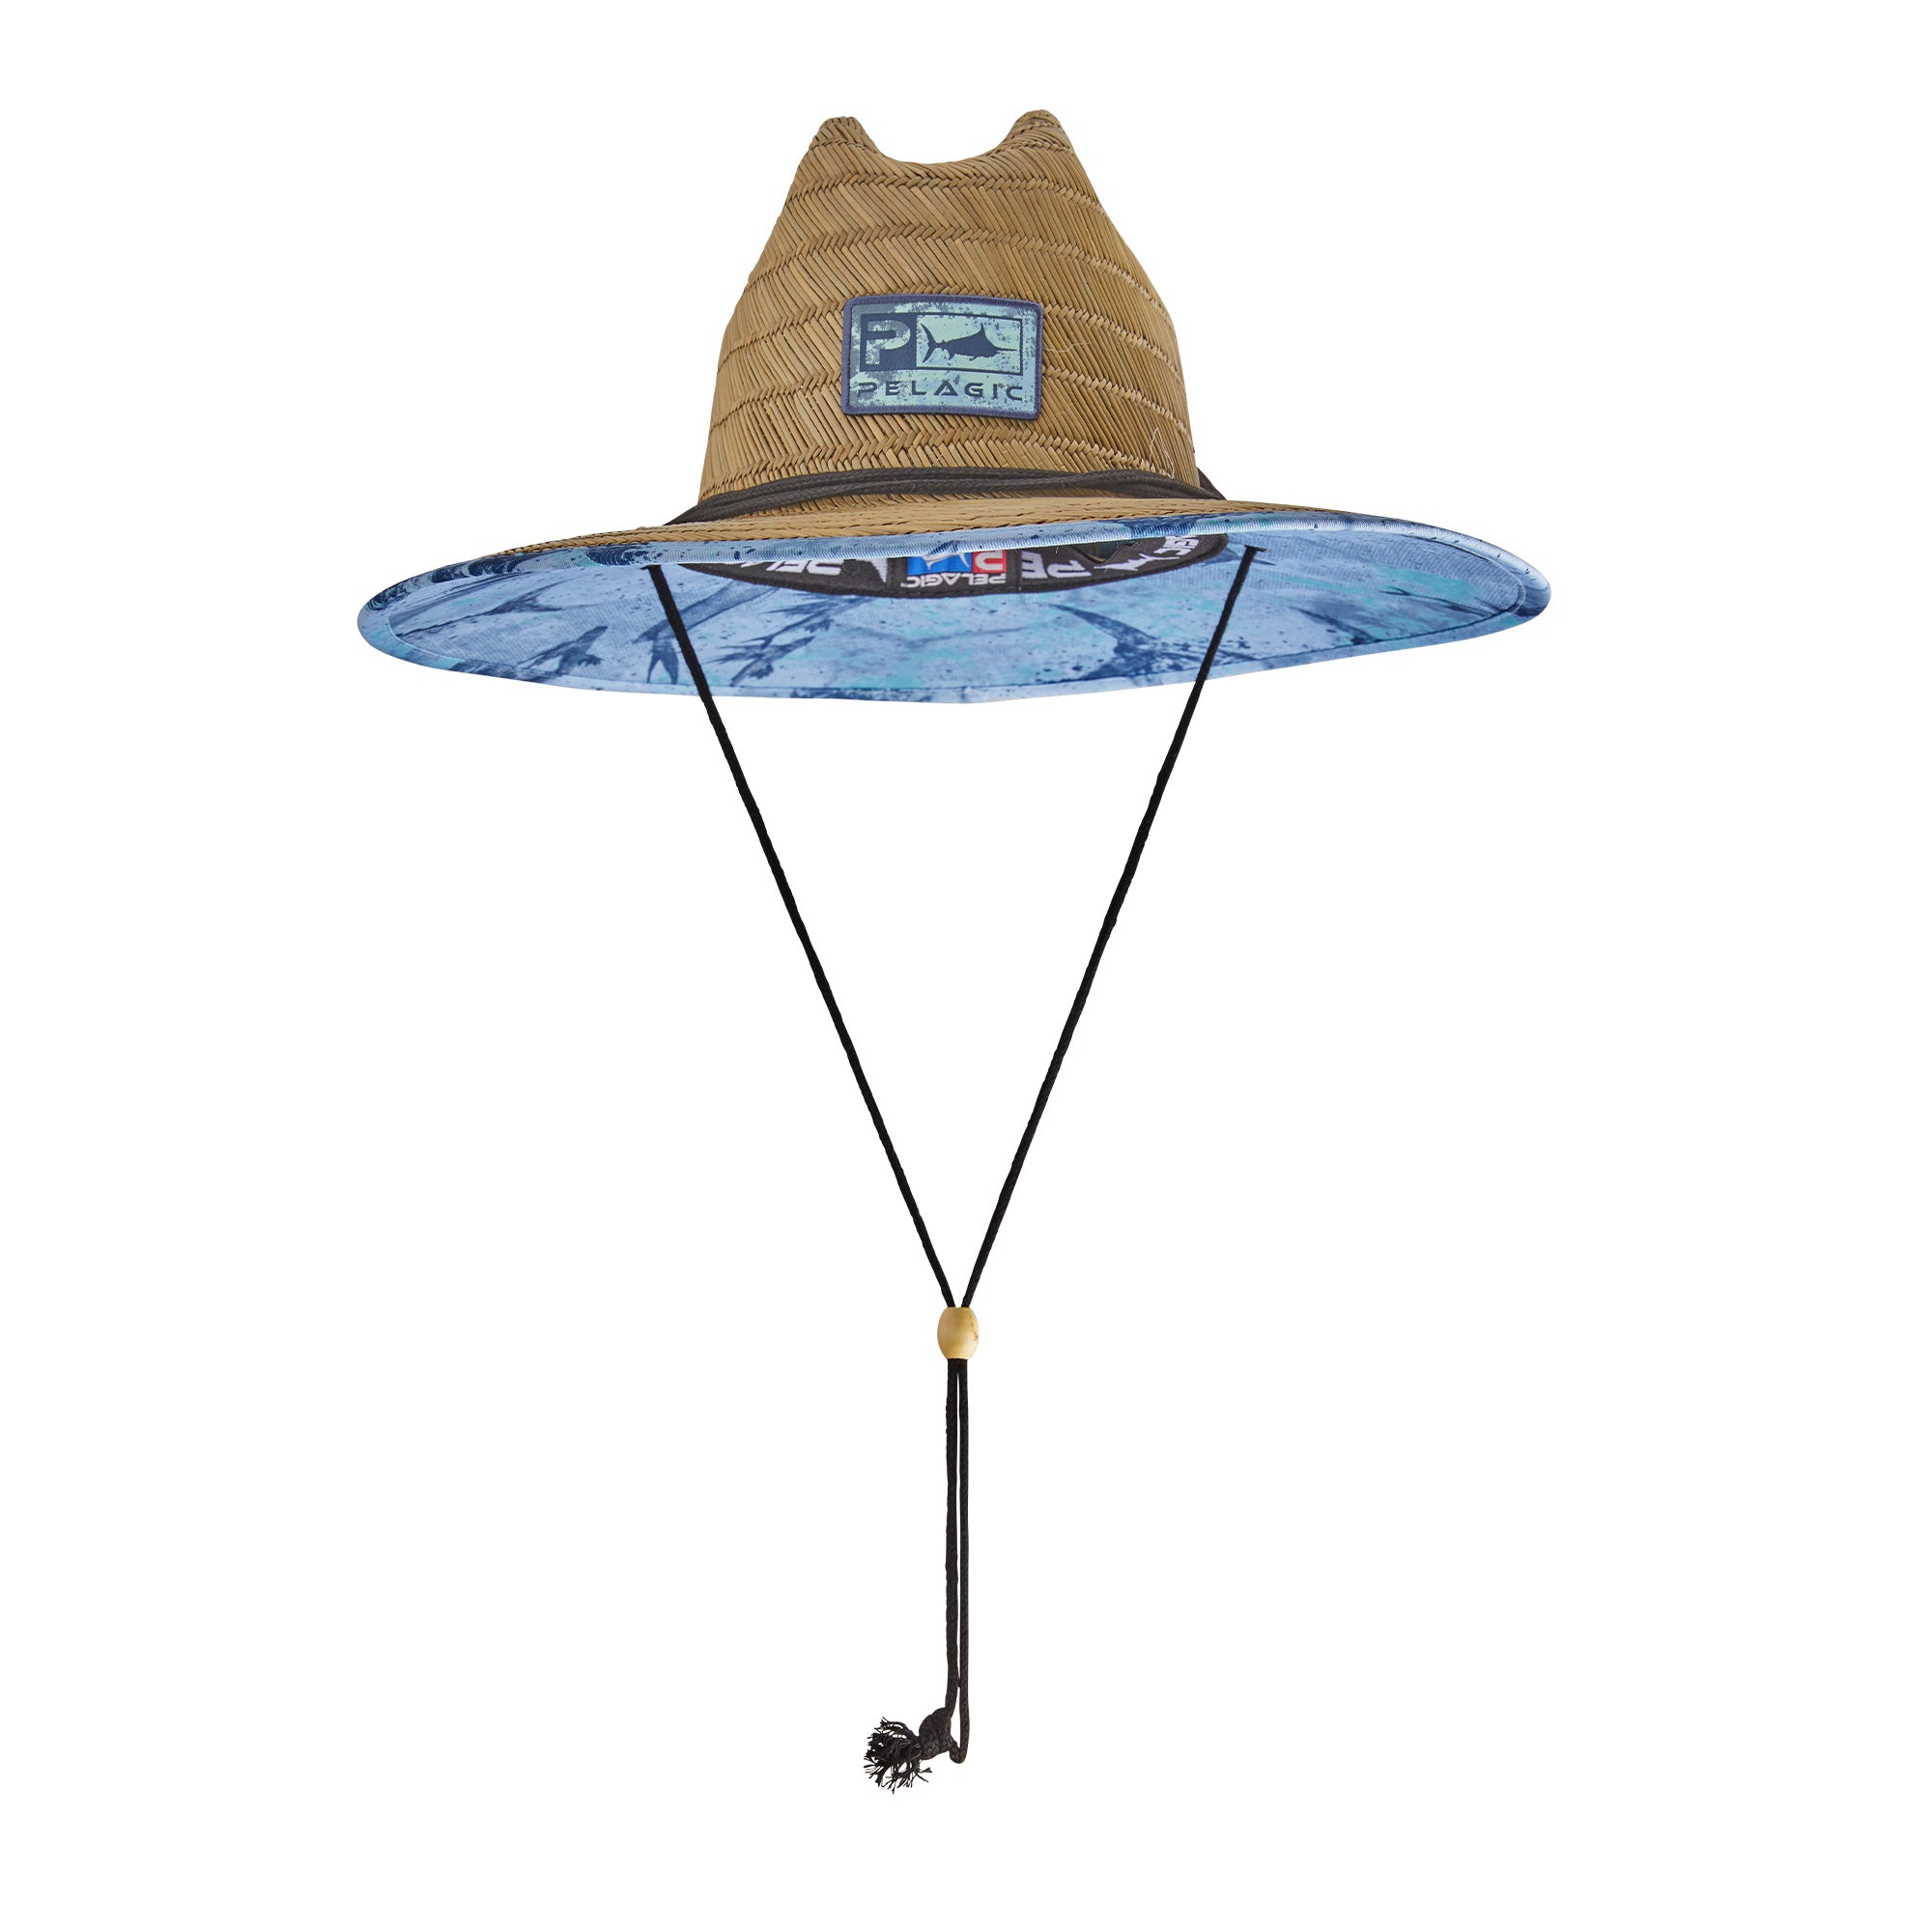 Blue Kelp Lightweight adjustable drawstring straw hat